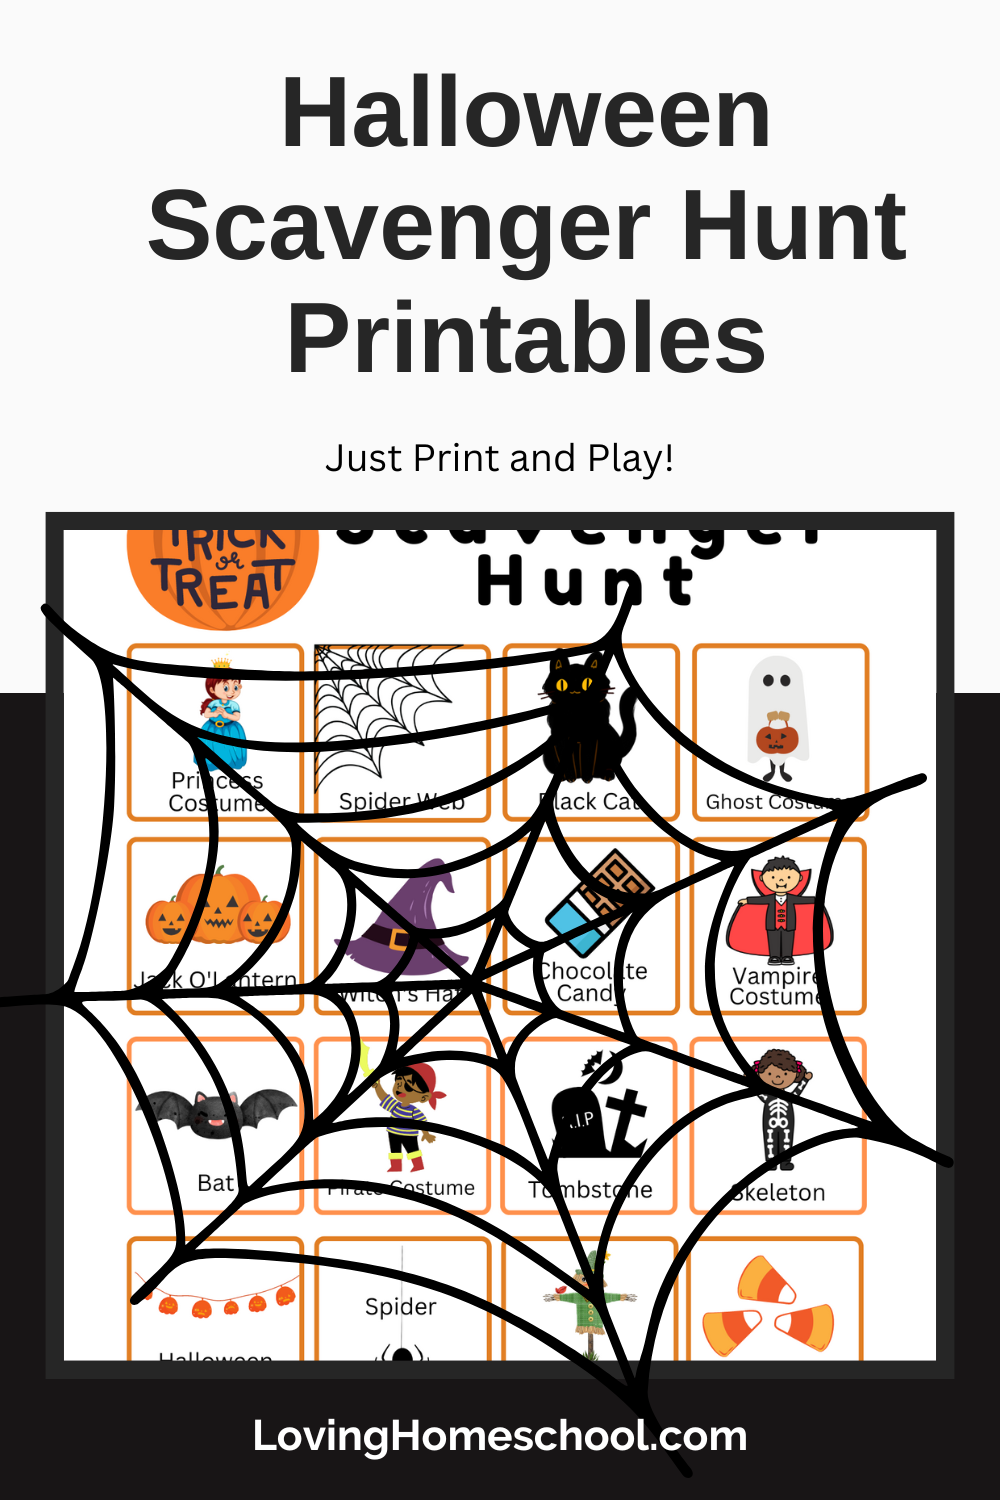 Halloween Scavenger Hunt Printables Pinterest Pin